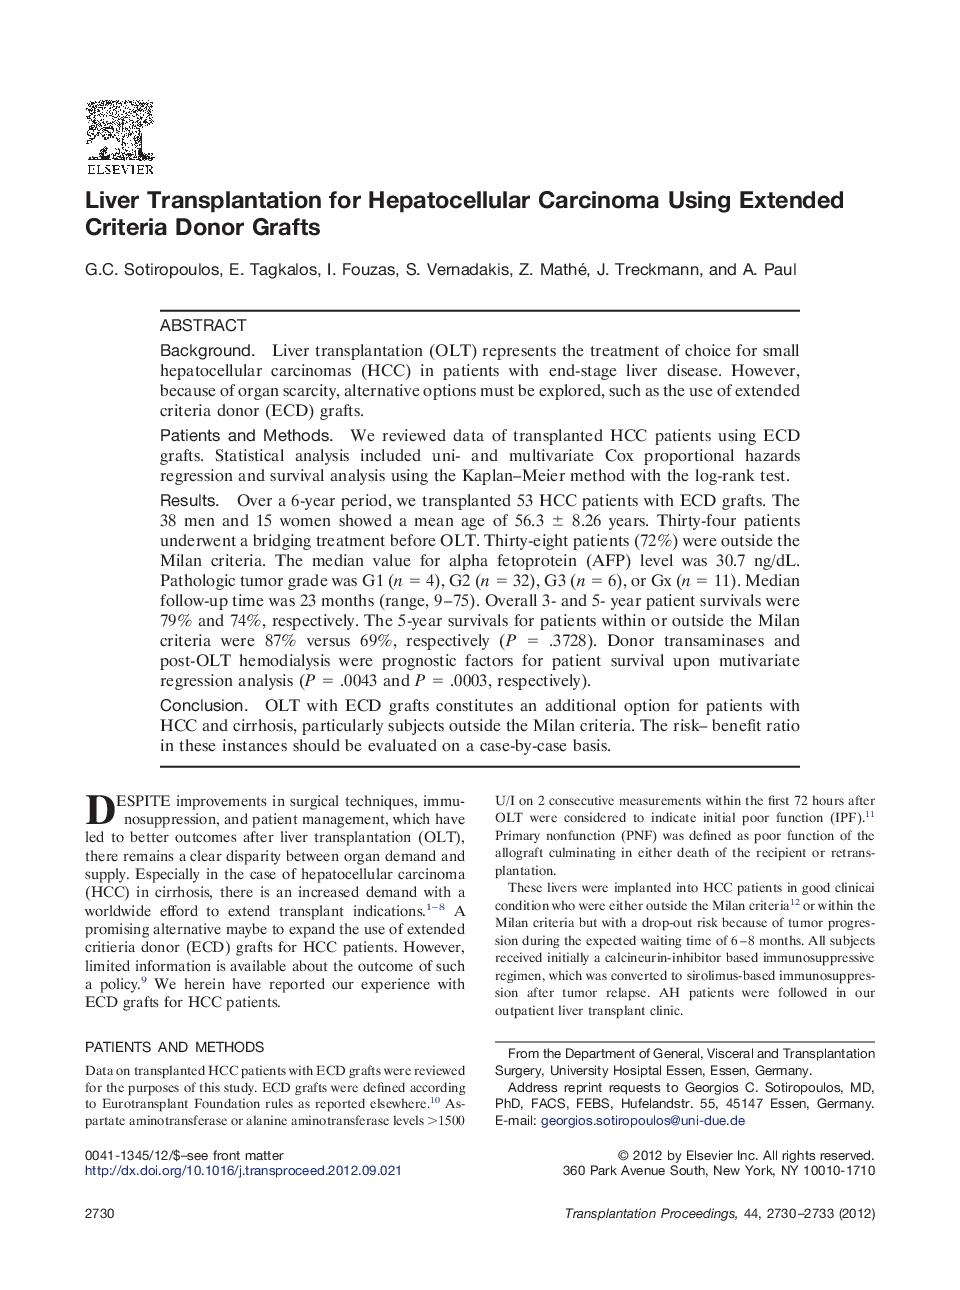 Liver Transplantation for Hepatocellular Carcinoma Using Extended Criteria Donor Grafts